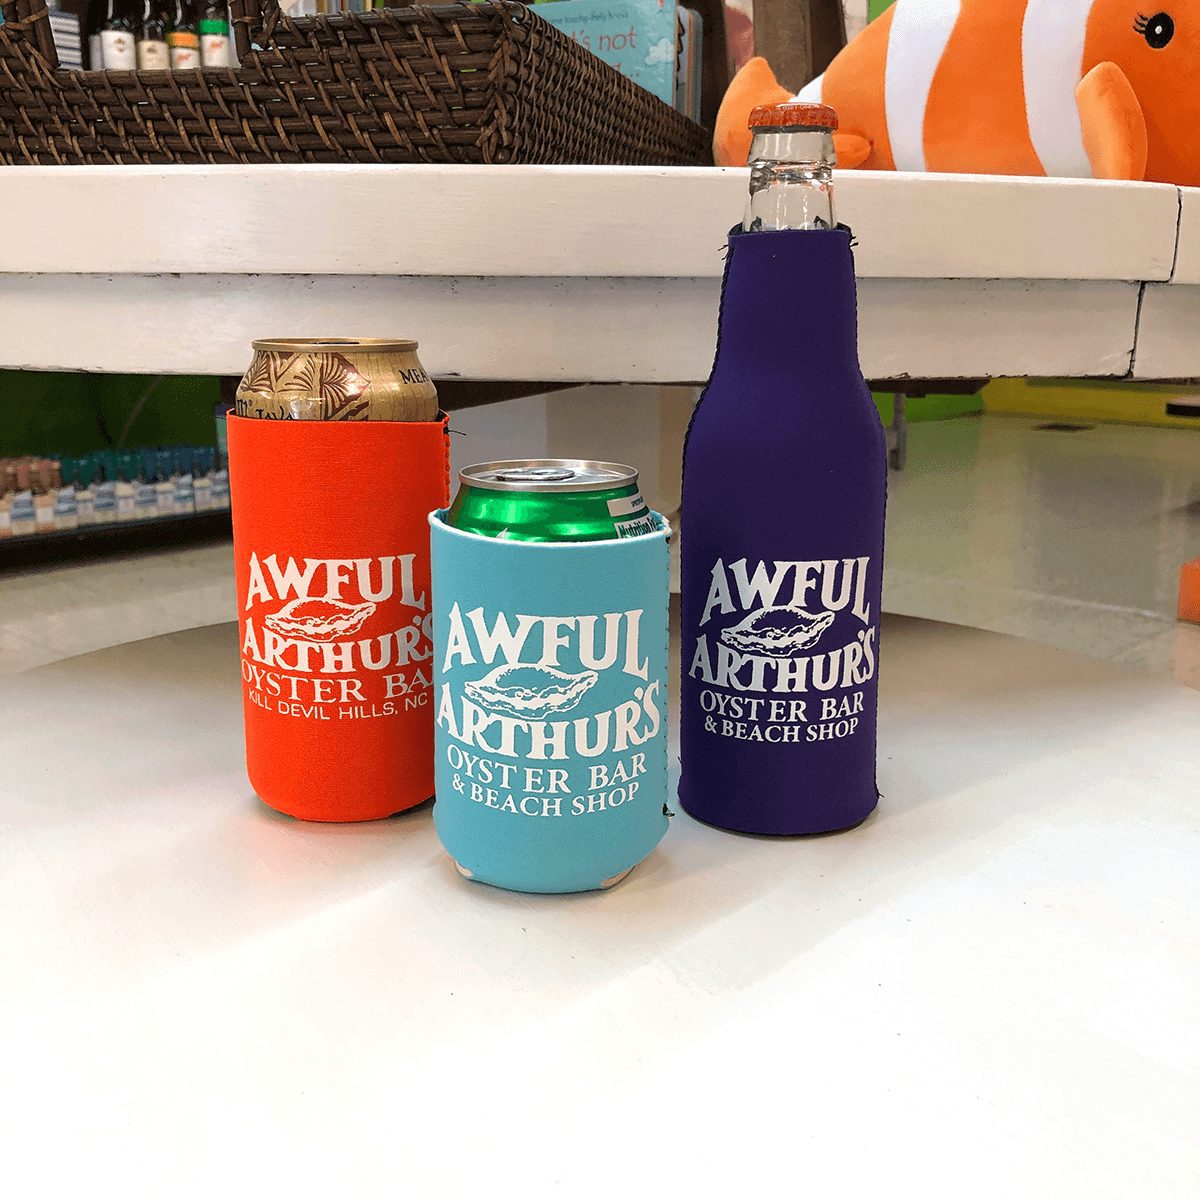 Bottle Koozie – Awful Arthur's Beach Shop